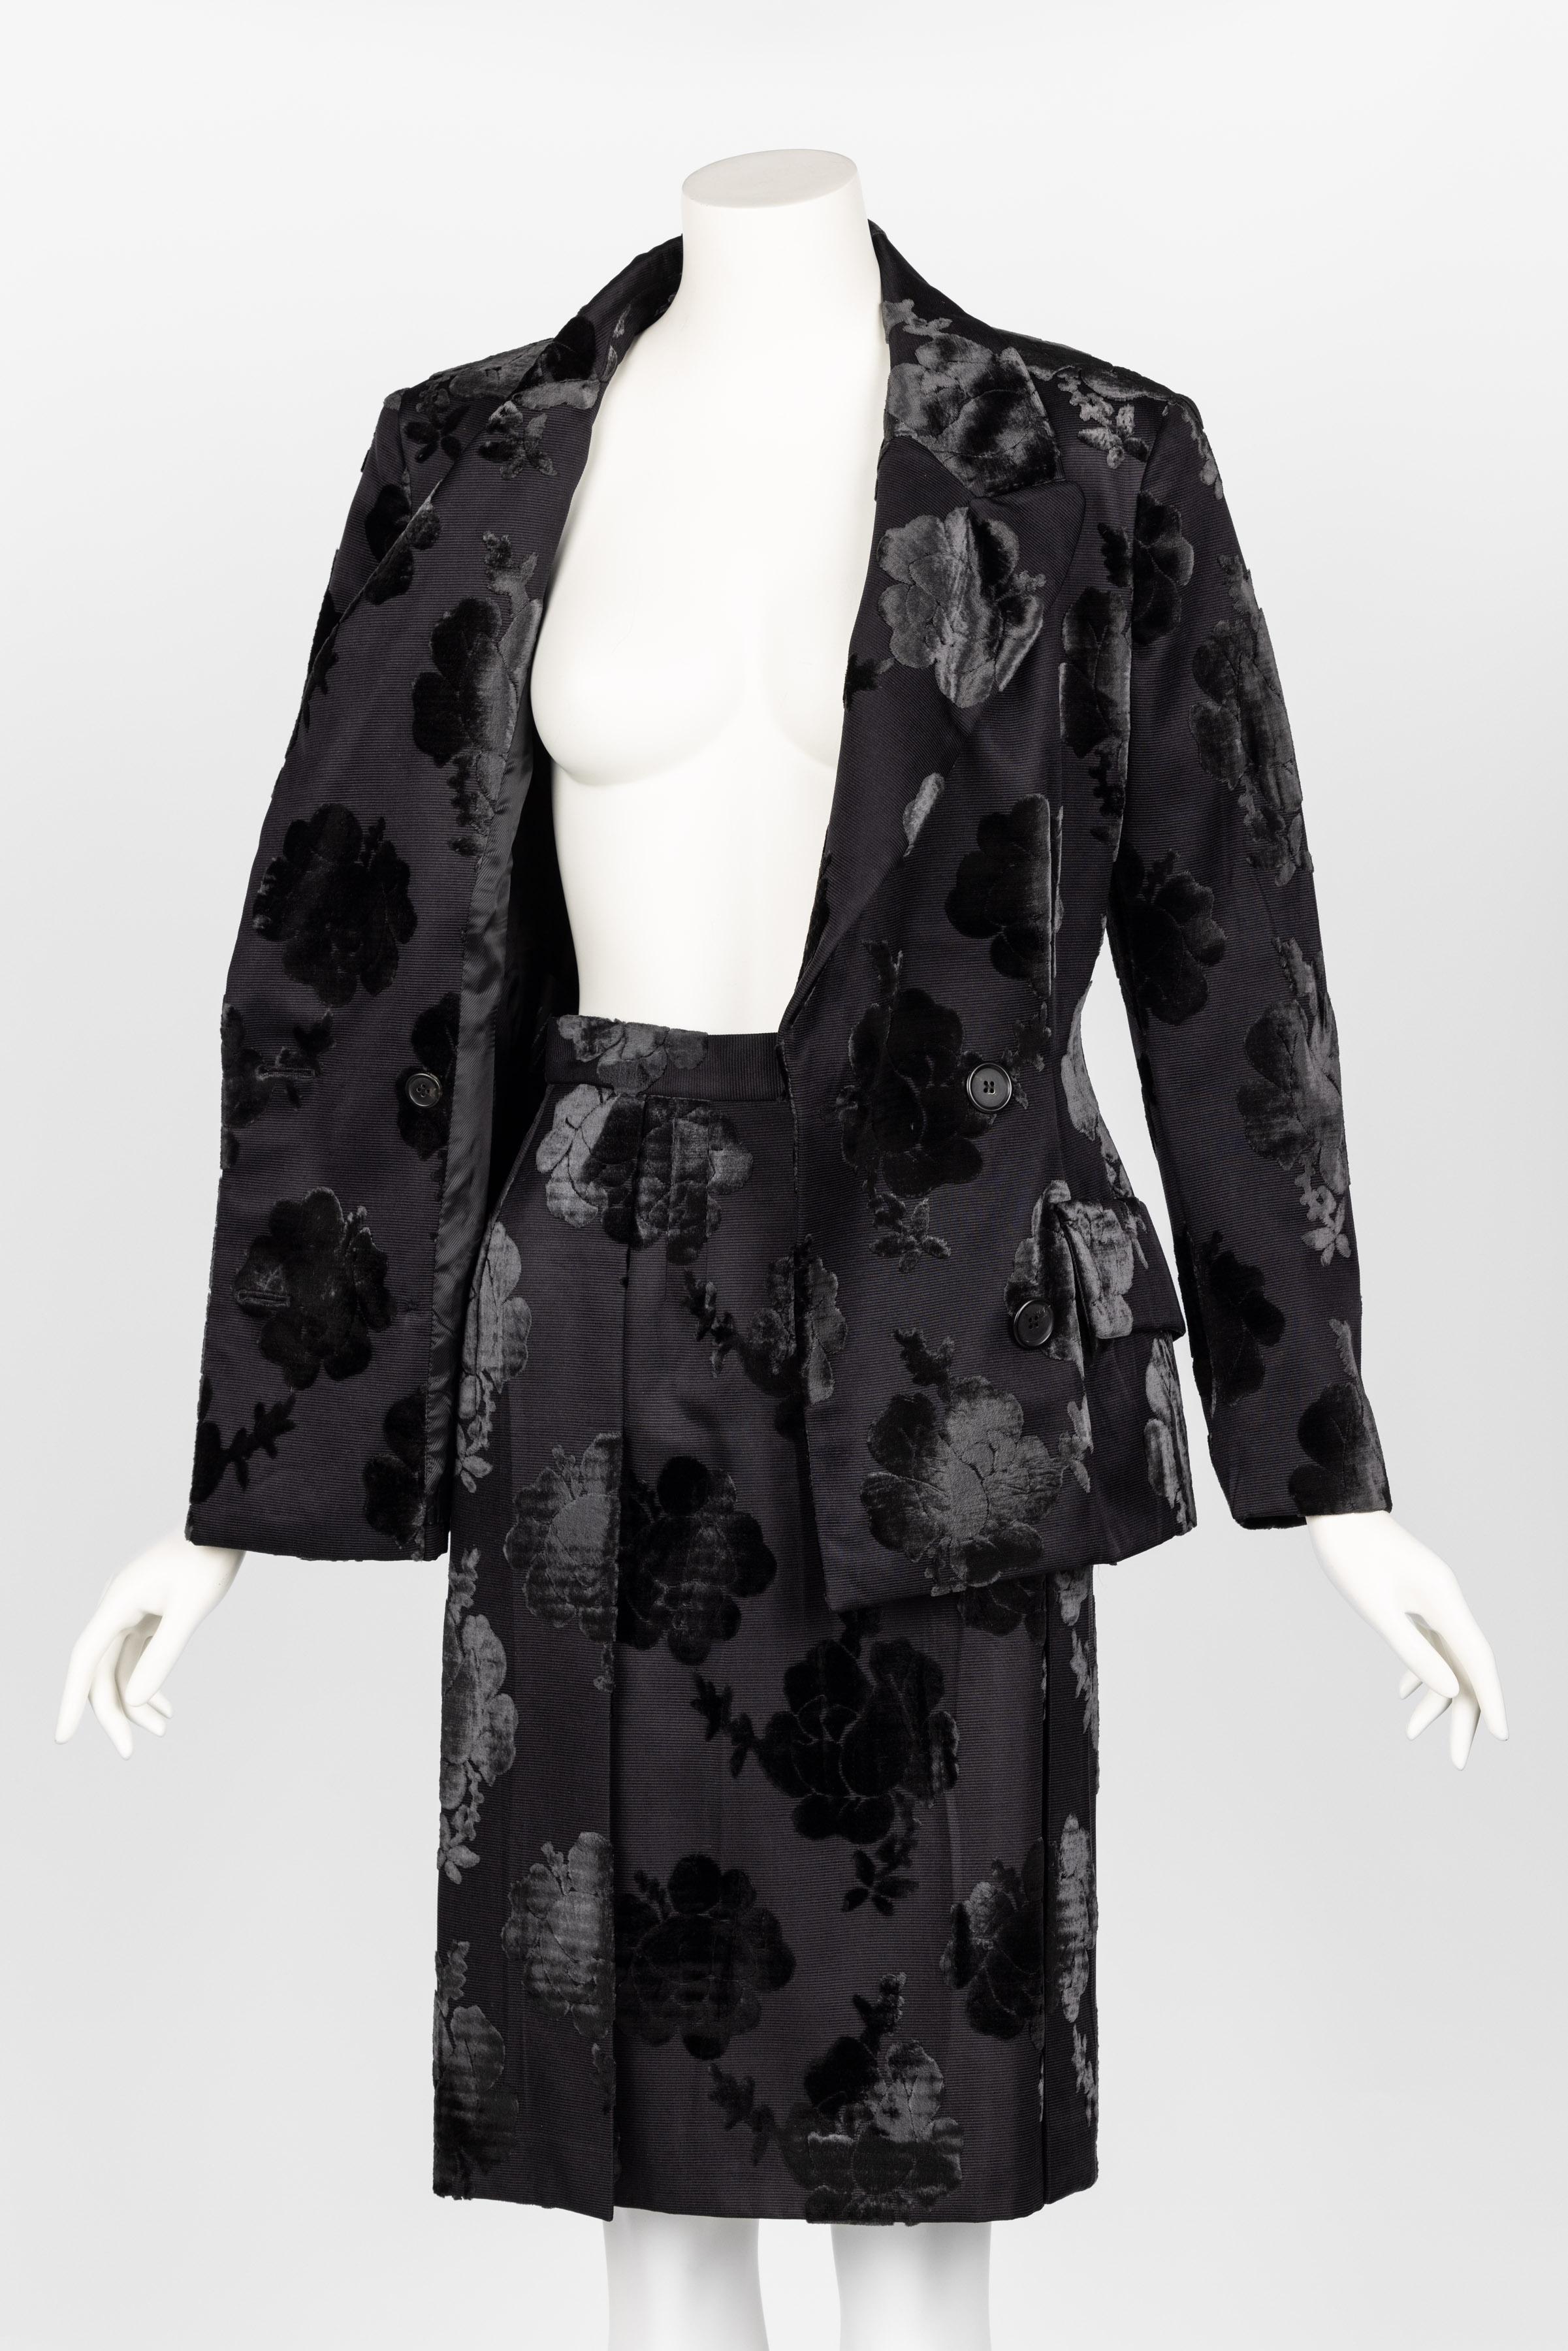 Prada F/W 2009 Runway Black Silk Velvet Floral Skirt Suit New W/Tags For Sale 2